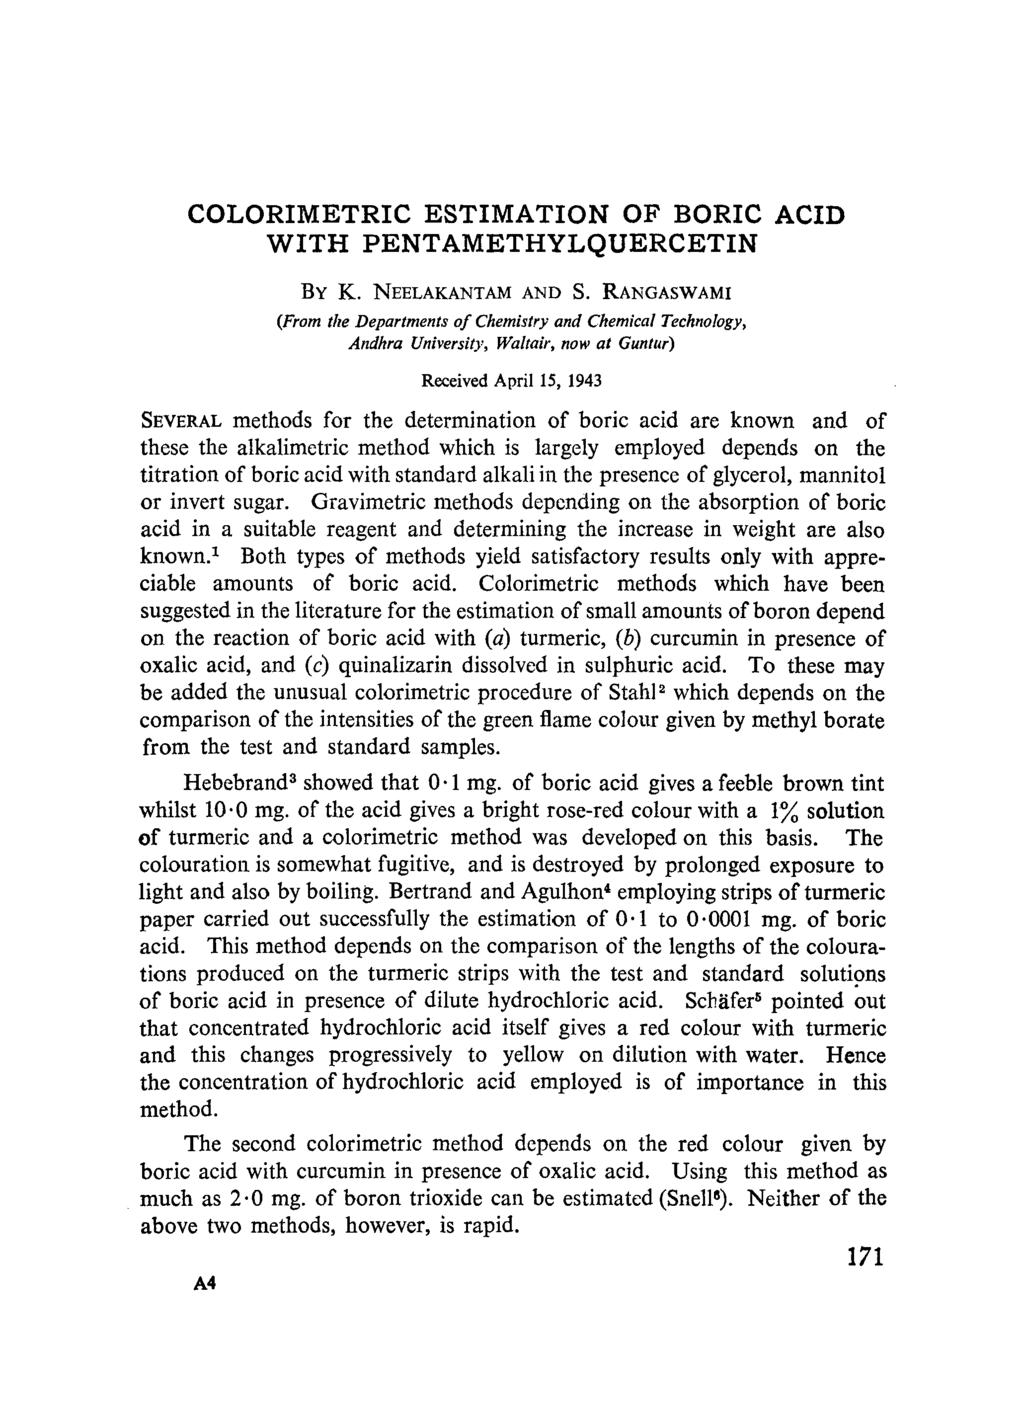 COLORIMETRIC ESTIMATION OF BORIC ACID WITH PENTAMETHYLQUERCETIN BY K. NEELAKANTAM AND S.